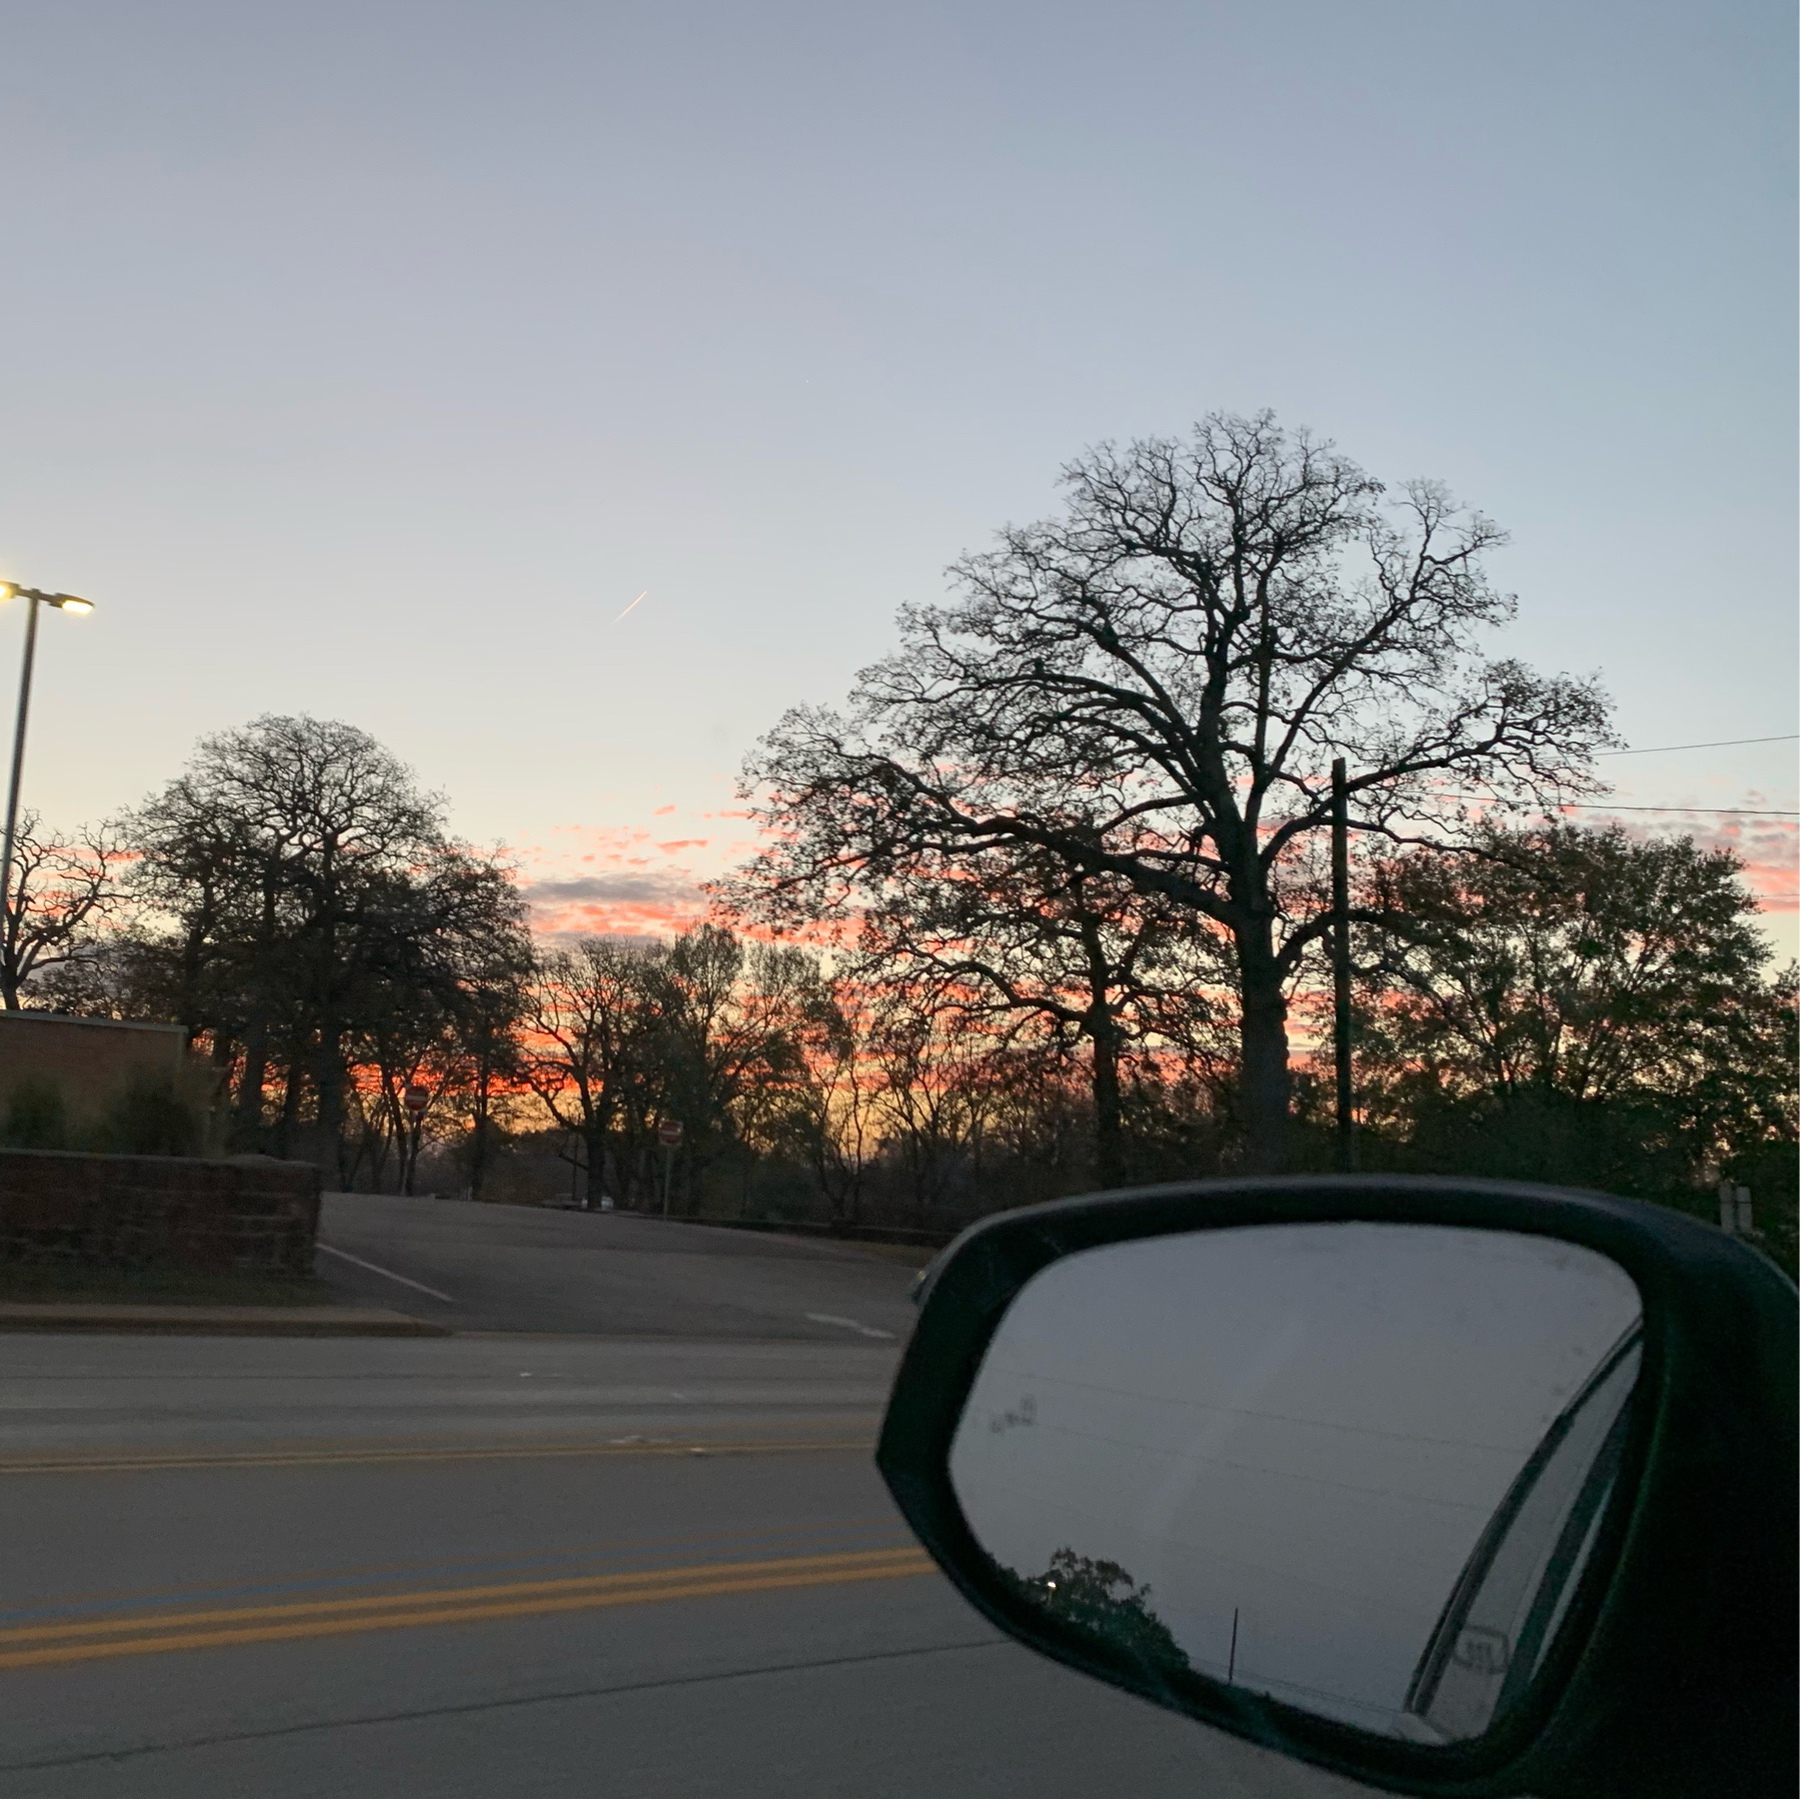 Sunrise out a car window